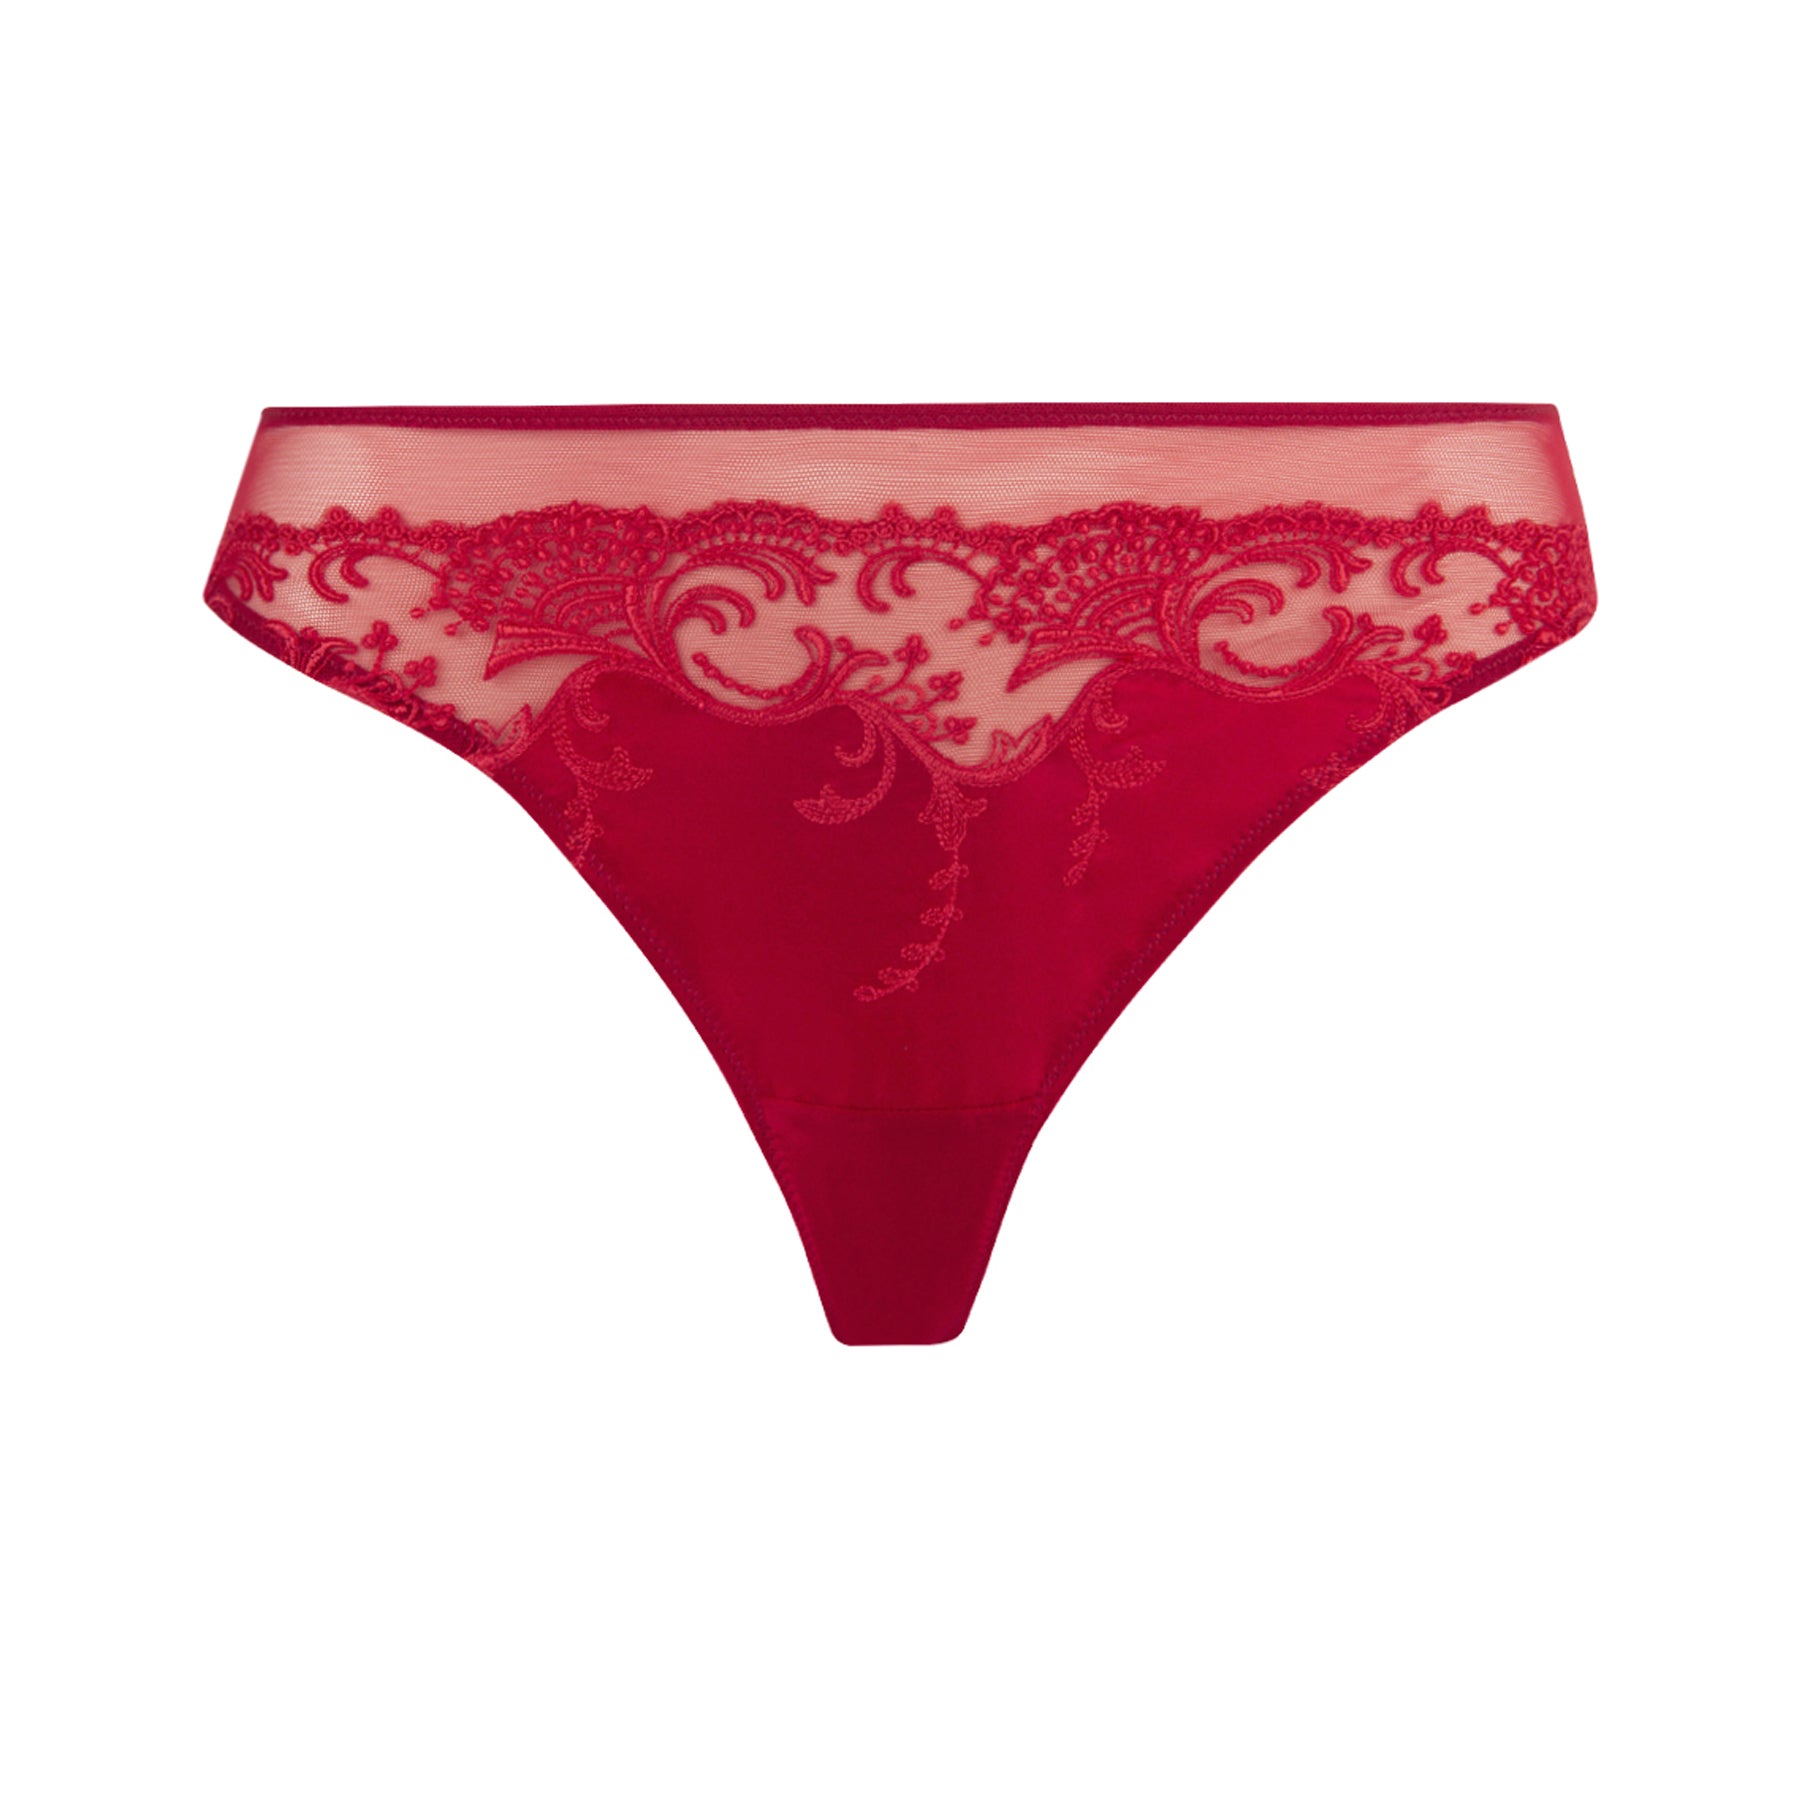 Nvzi Women's Seamless Underwears Panties Sexy Lace Hipster Bikini Thong  Briefs Panty Underwear for Women,3pcs(Pink,L) 